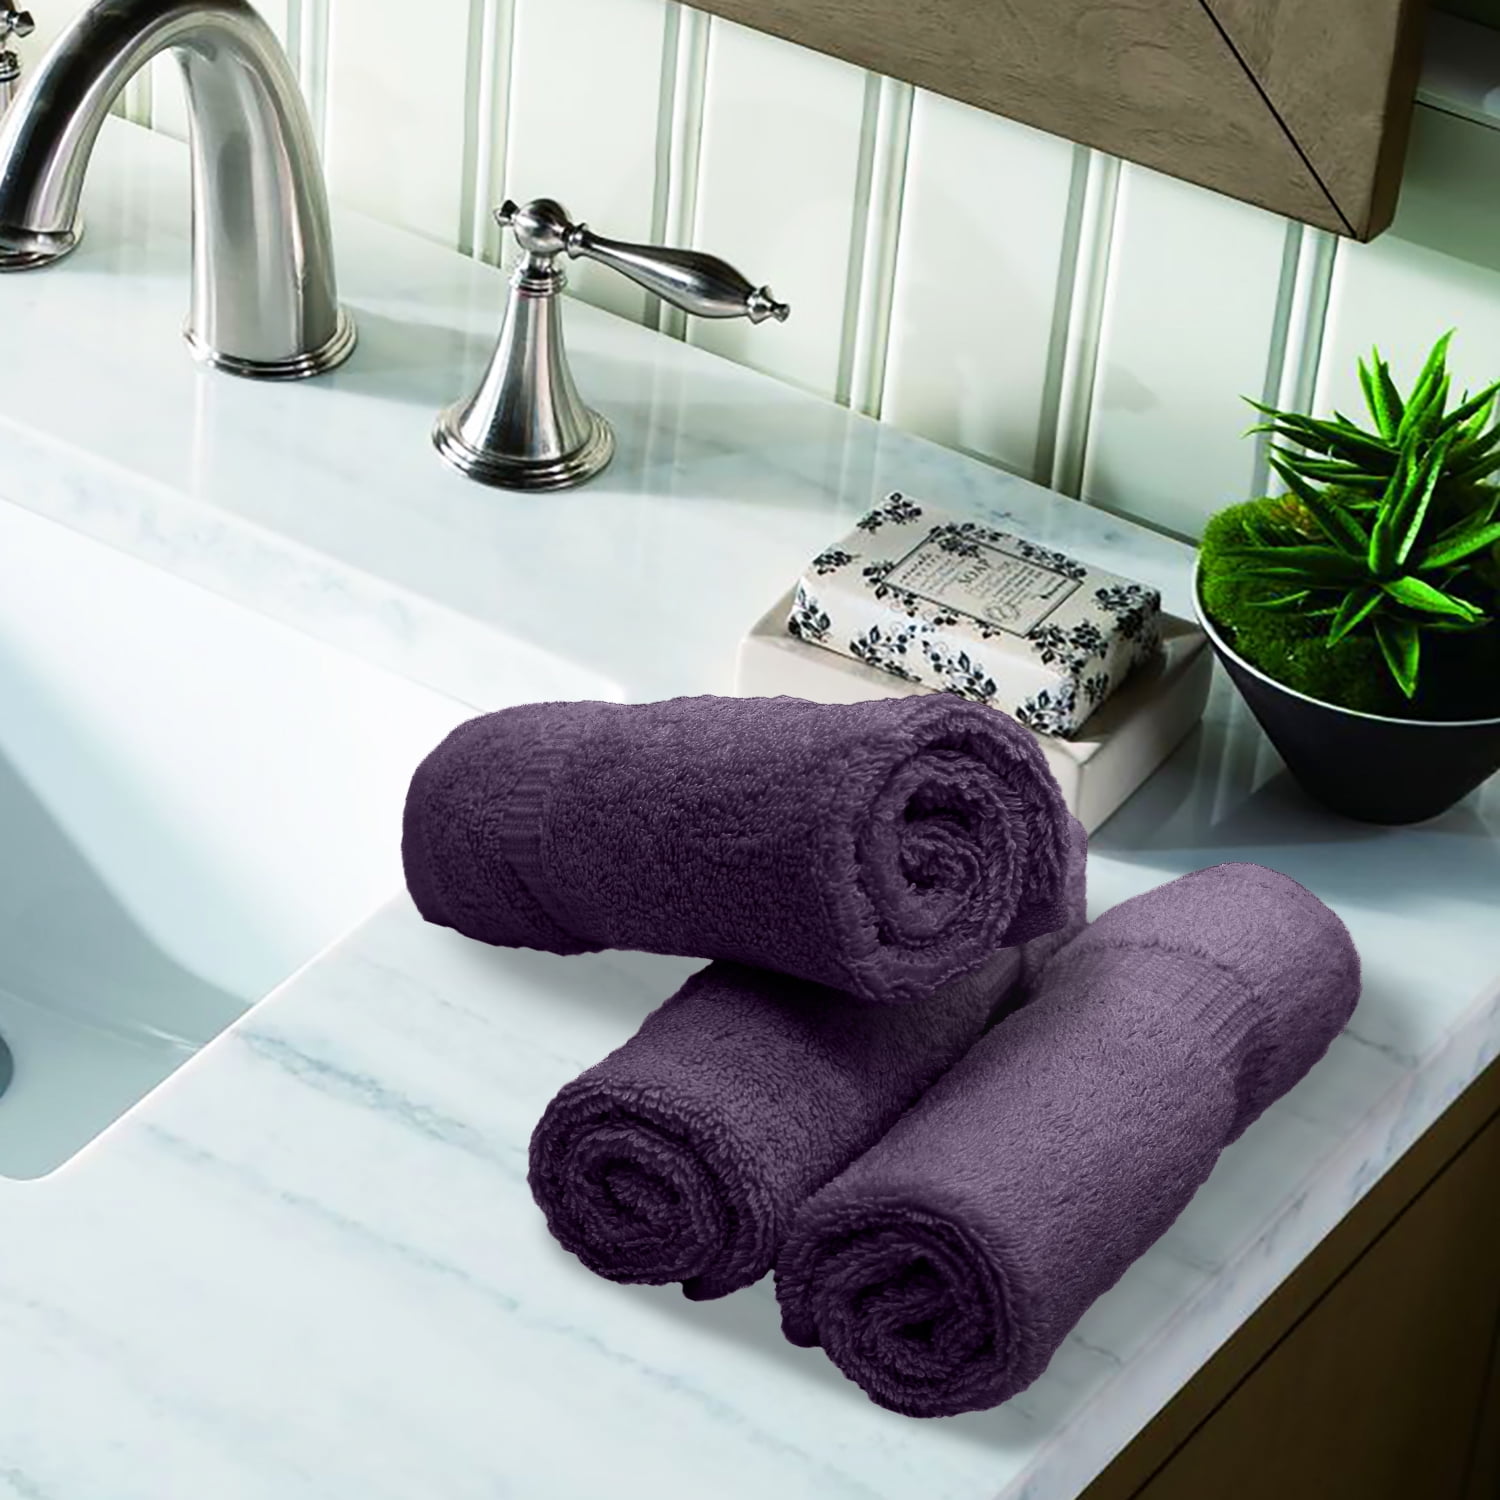 GetUSCart- Mosobam 700 GSM Hotel Luxury Bamboo-Cotton, Bath Towels 30X58,  White, Set of 2, Quick Dry, Soft Spa-Like Turkish Bathroom Sets, Oversized  Extra Large Body Sheet Shower Towel, Prime Bulk